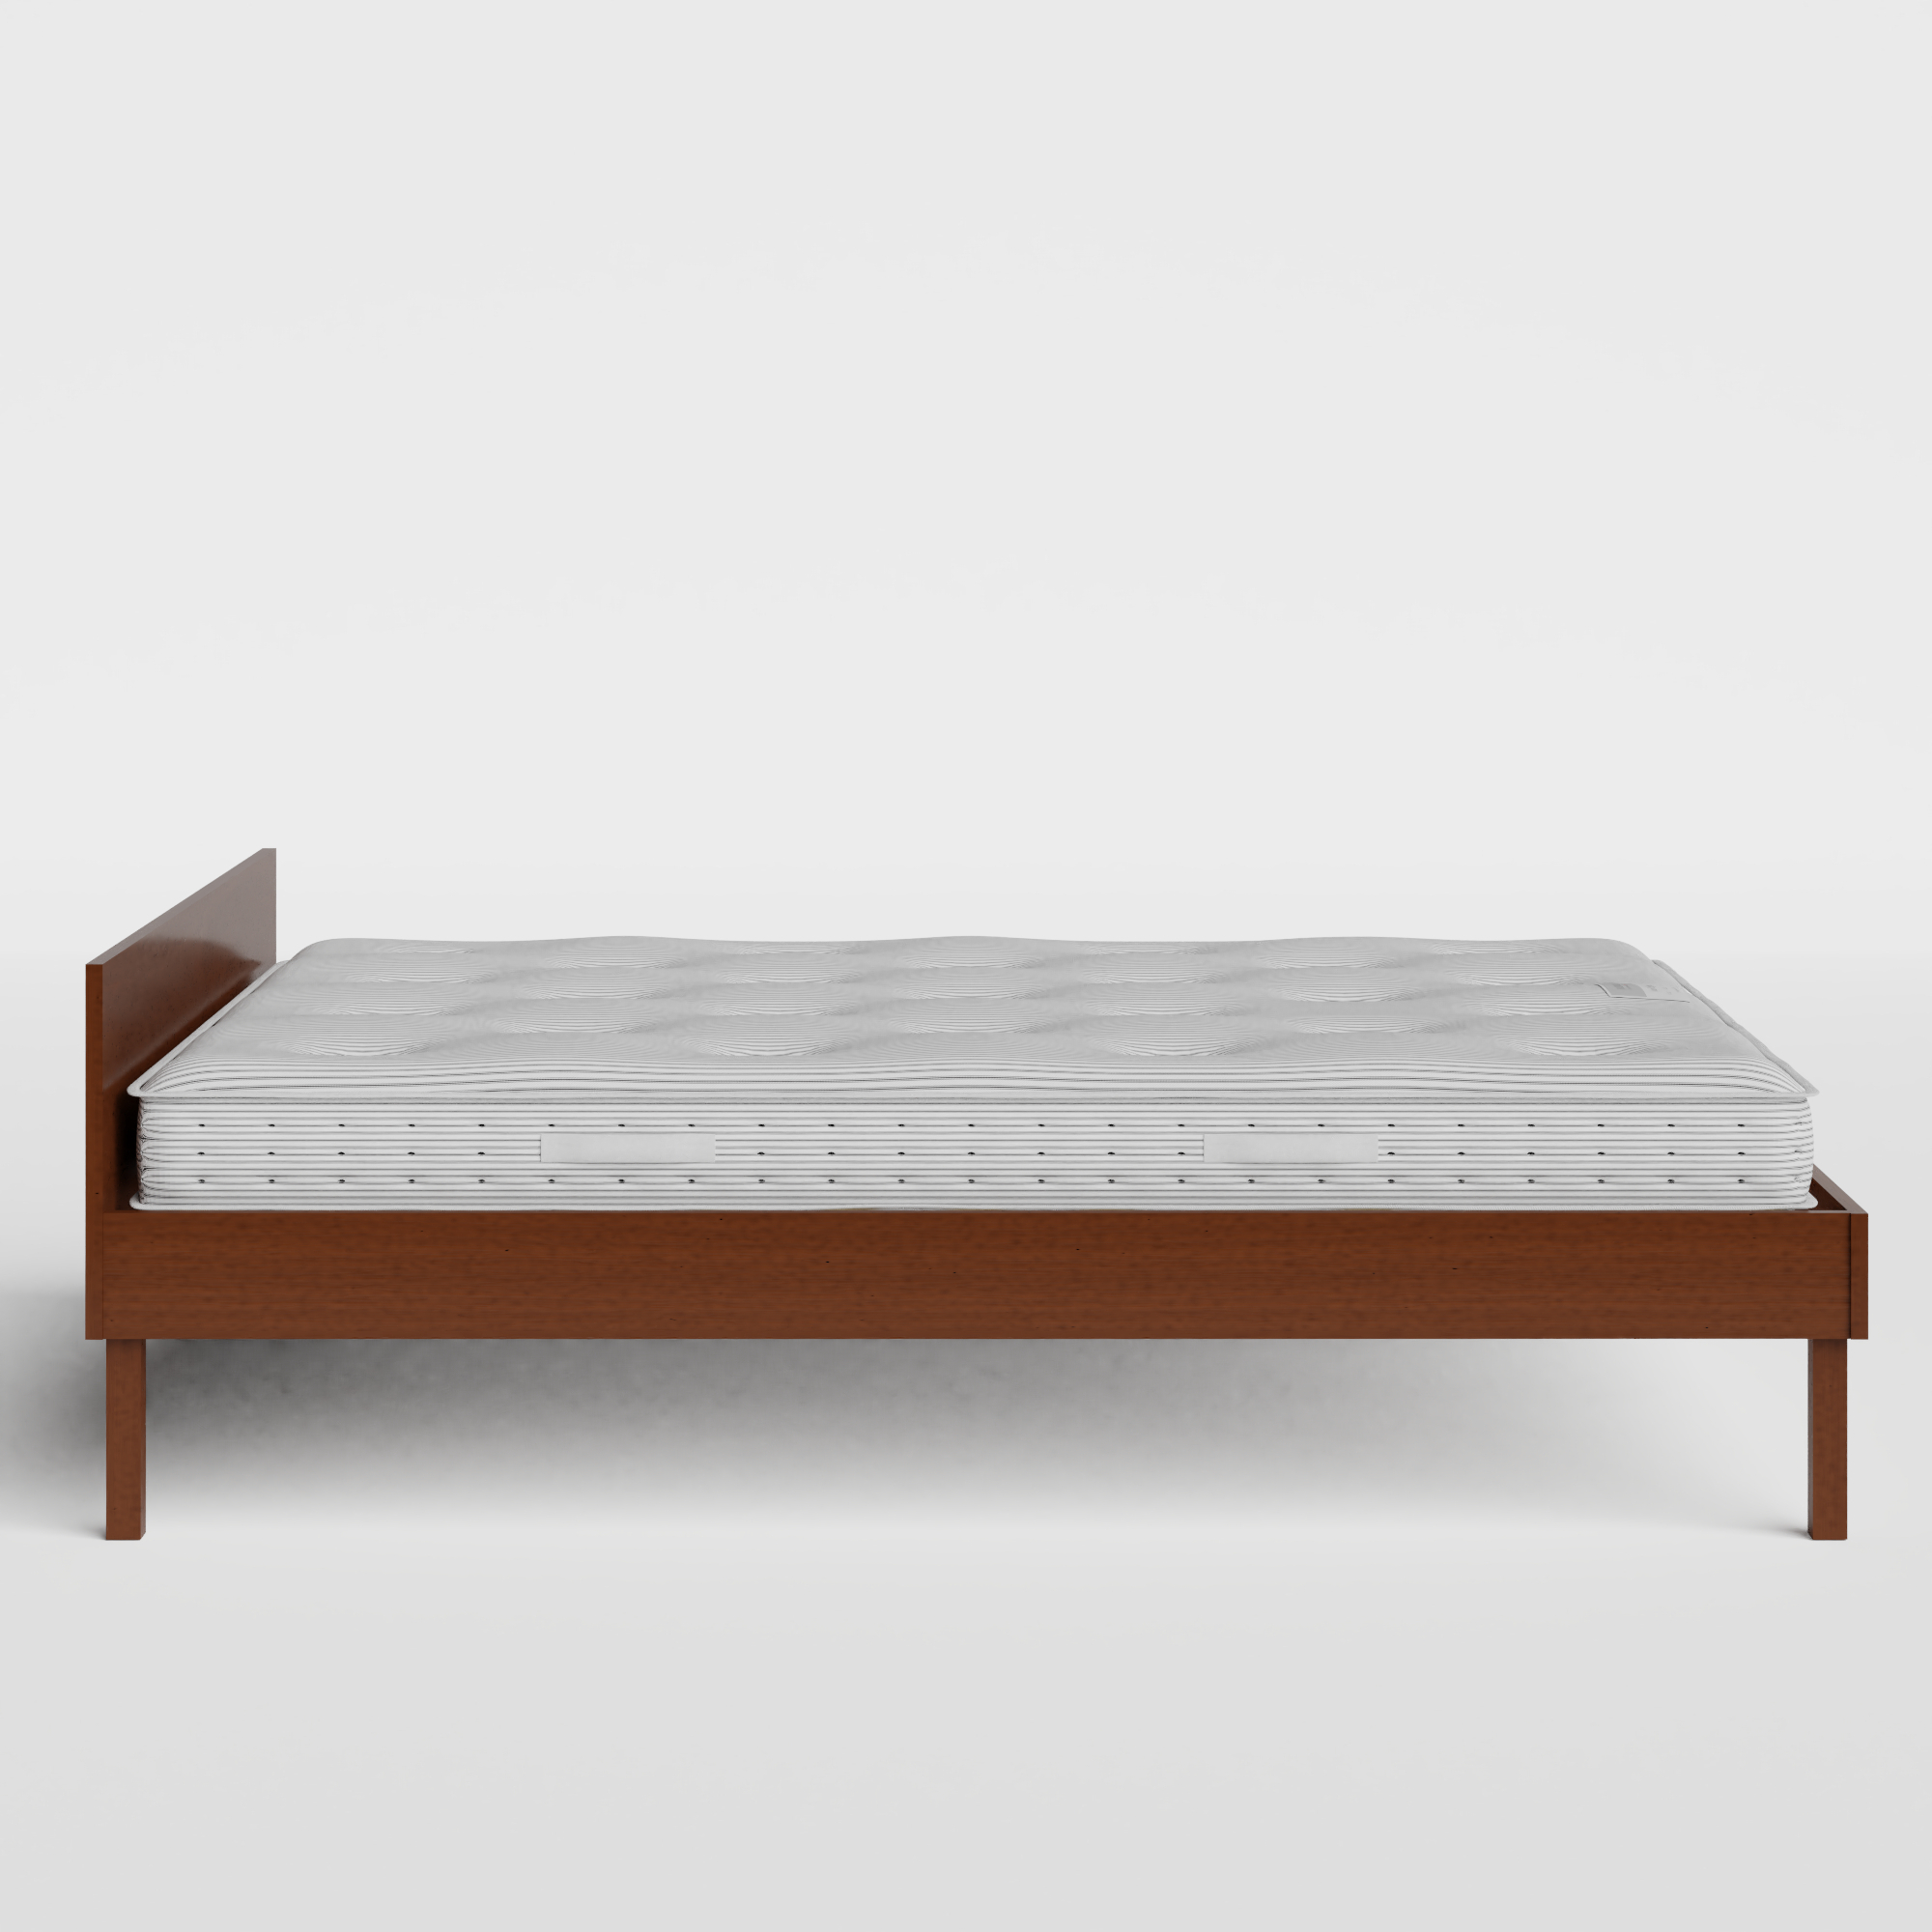 Fuji wood bed in dark cherry with Juno mattress